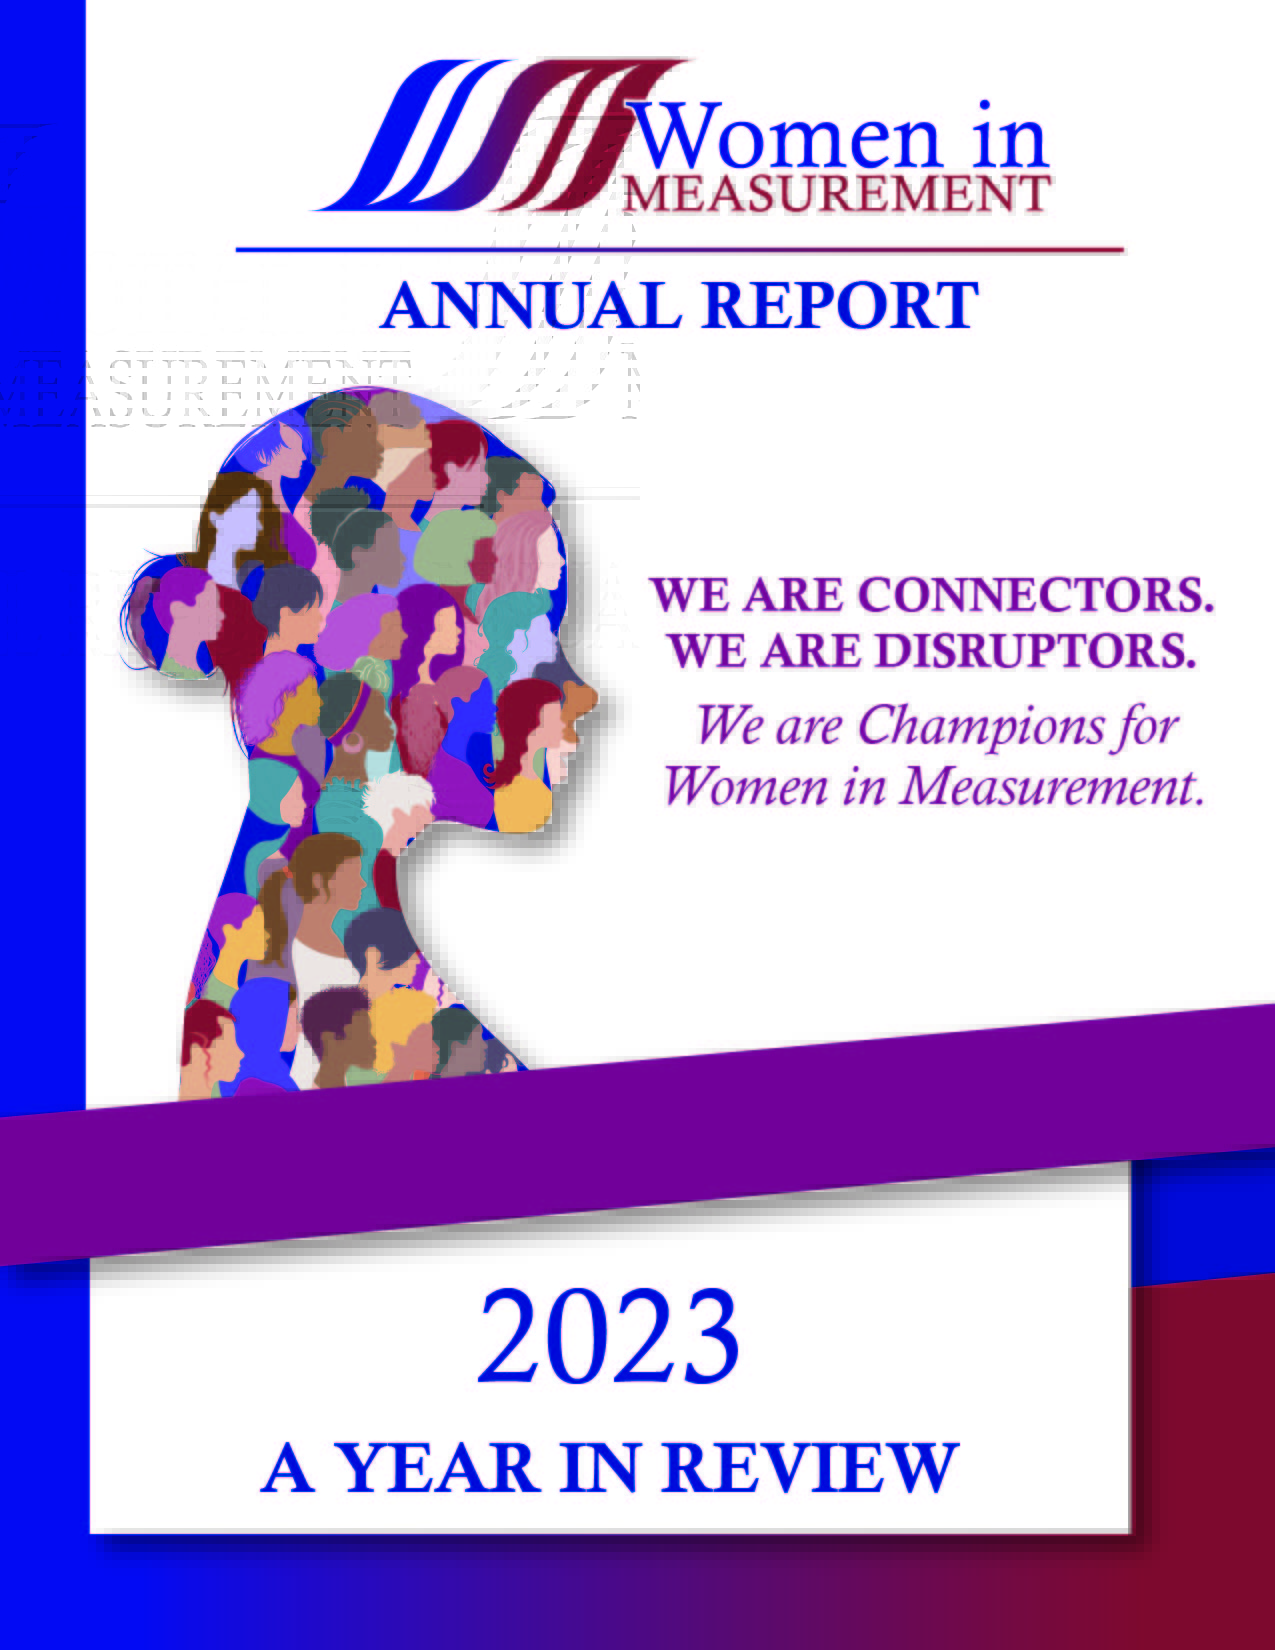 Women in Measurement 2023 Annual Report